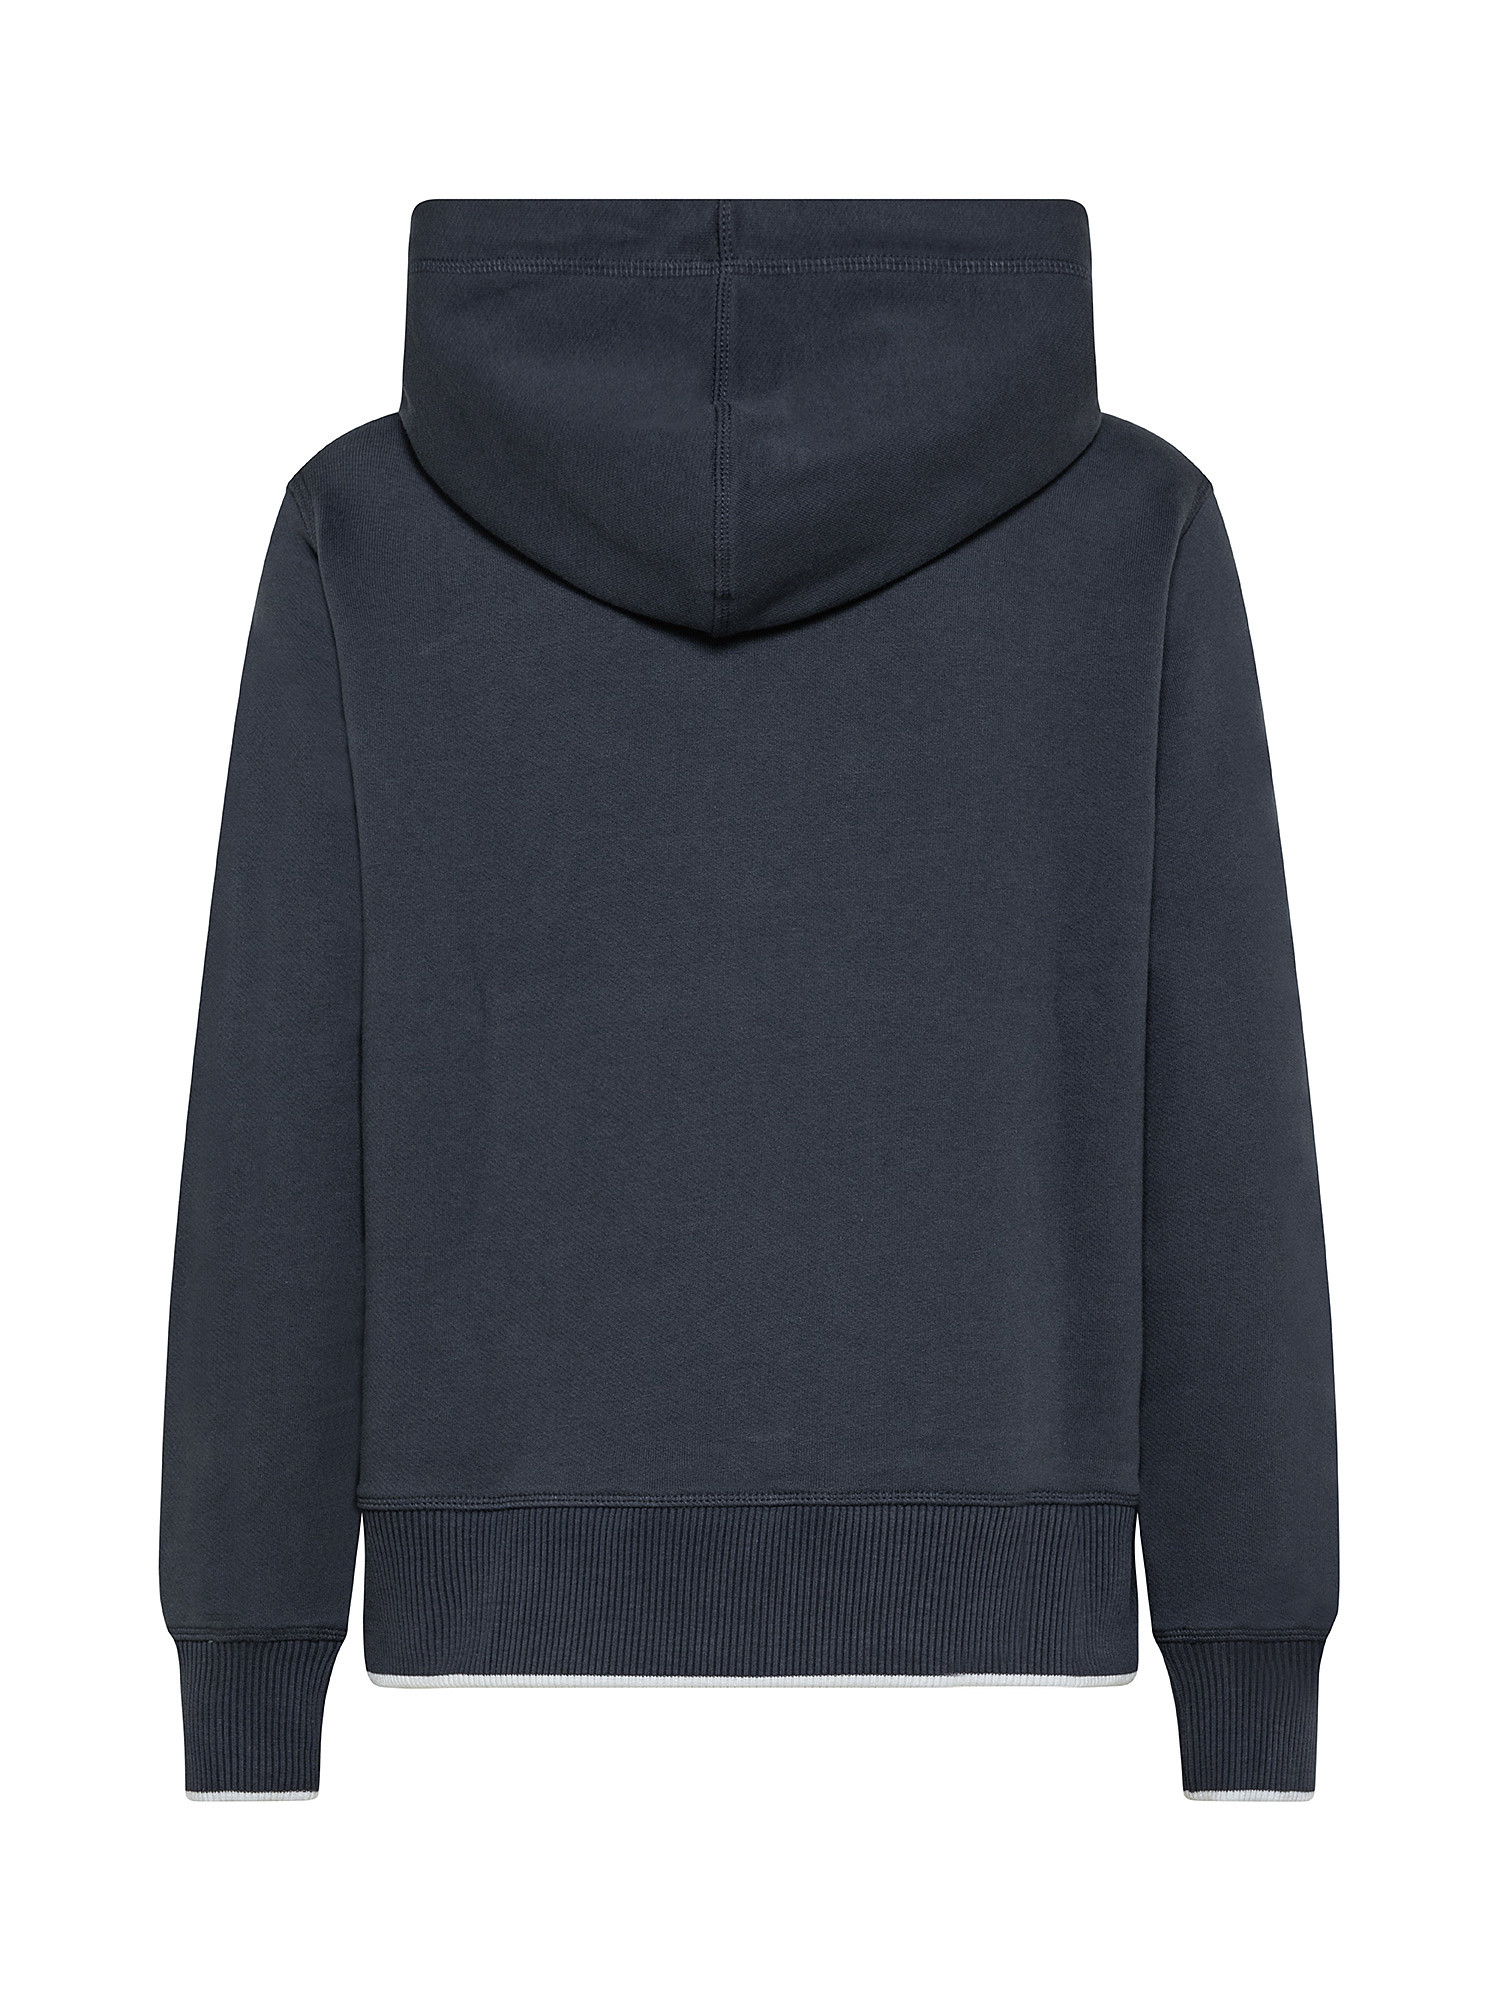 Charline hooded sweatshirt in cotton, Dark Blue, large image number 1